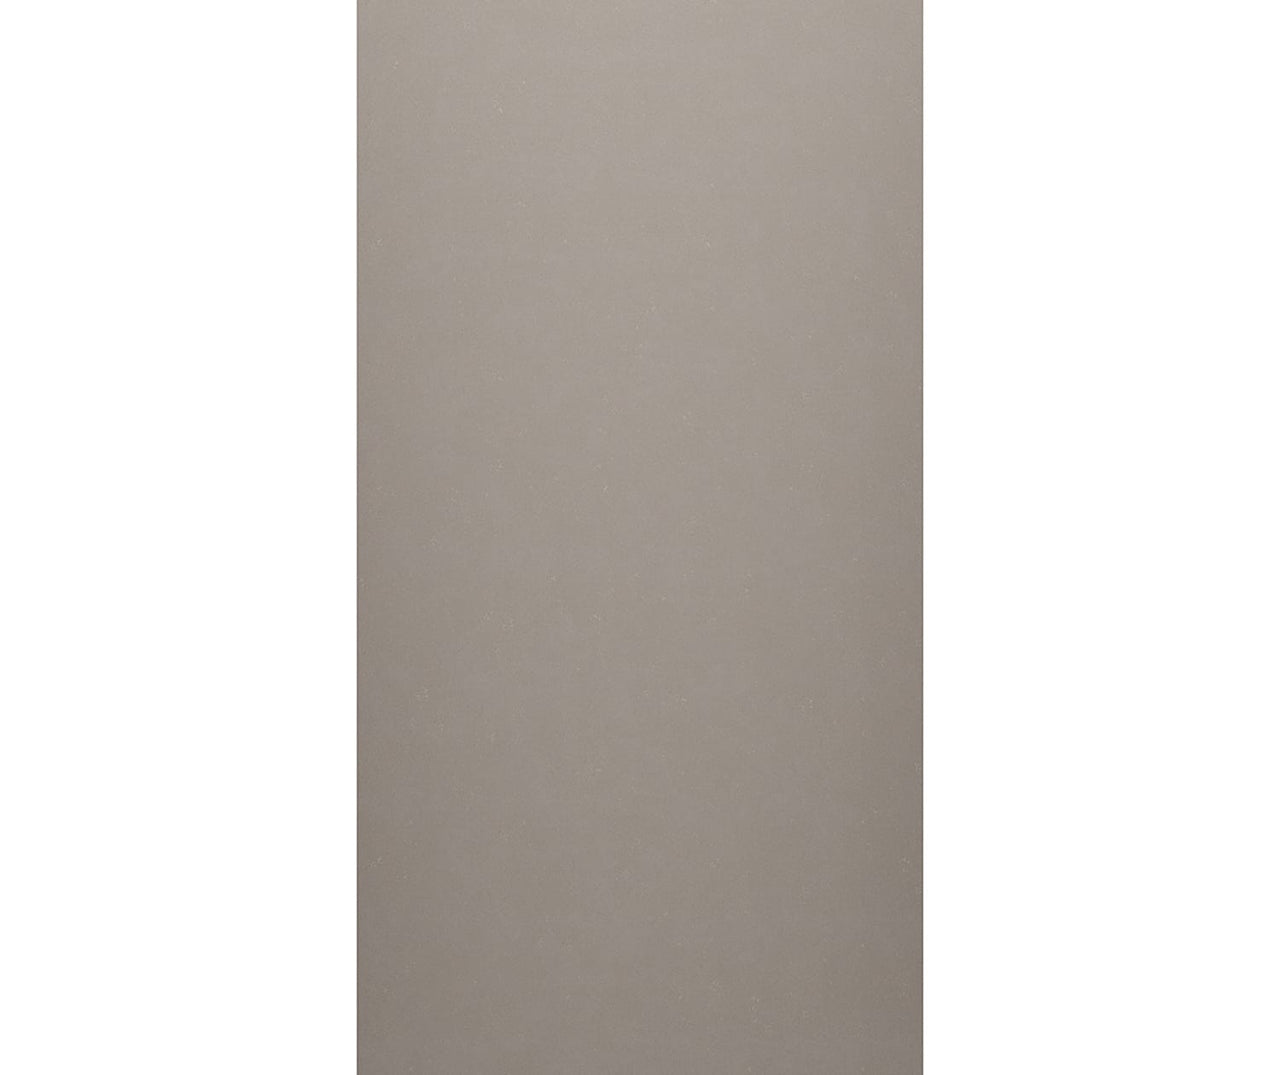 SMMK-7250-1 50 x 72 Swanstone Smooth Tile Glue up Bathtub and Shower Single Wall Panel  - BNGBath